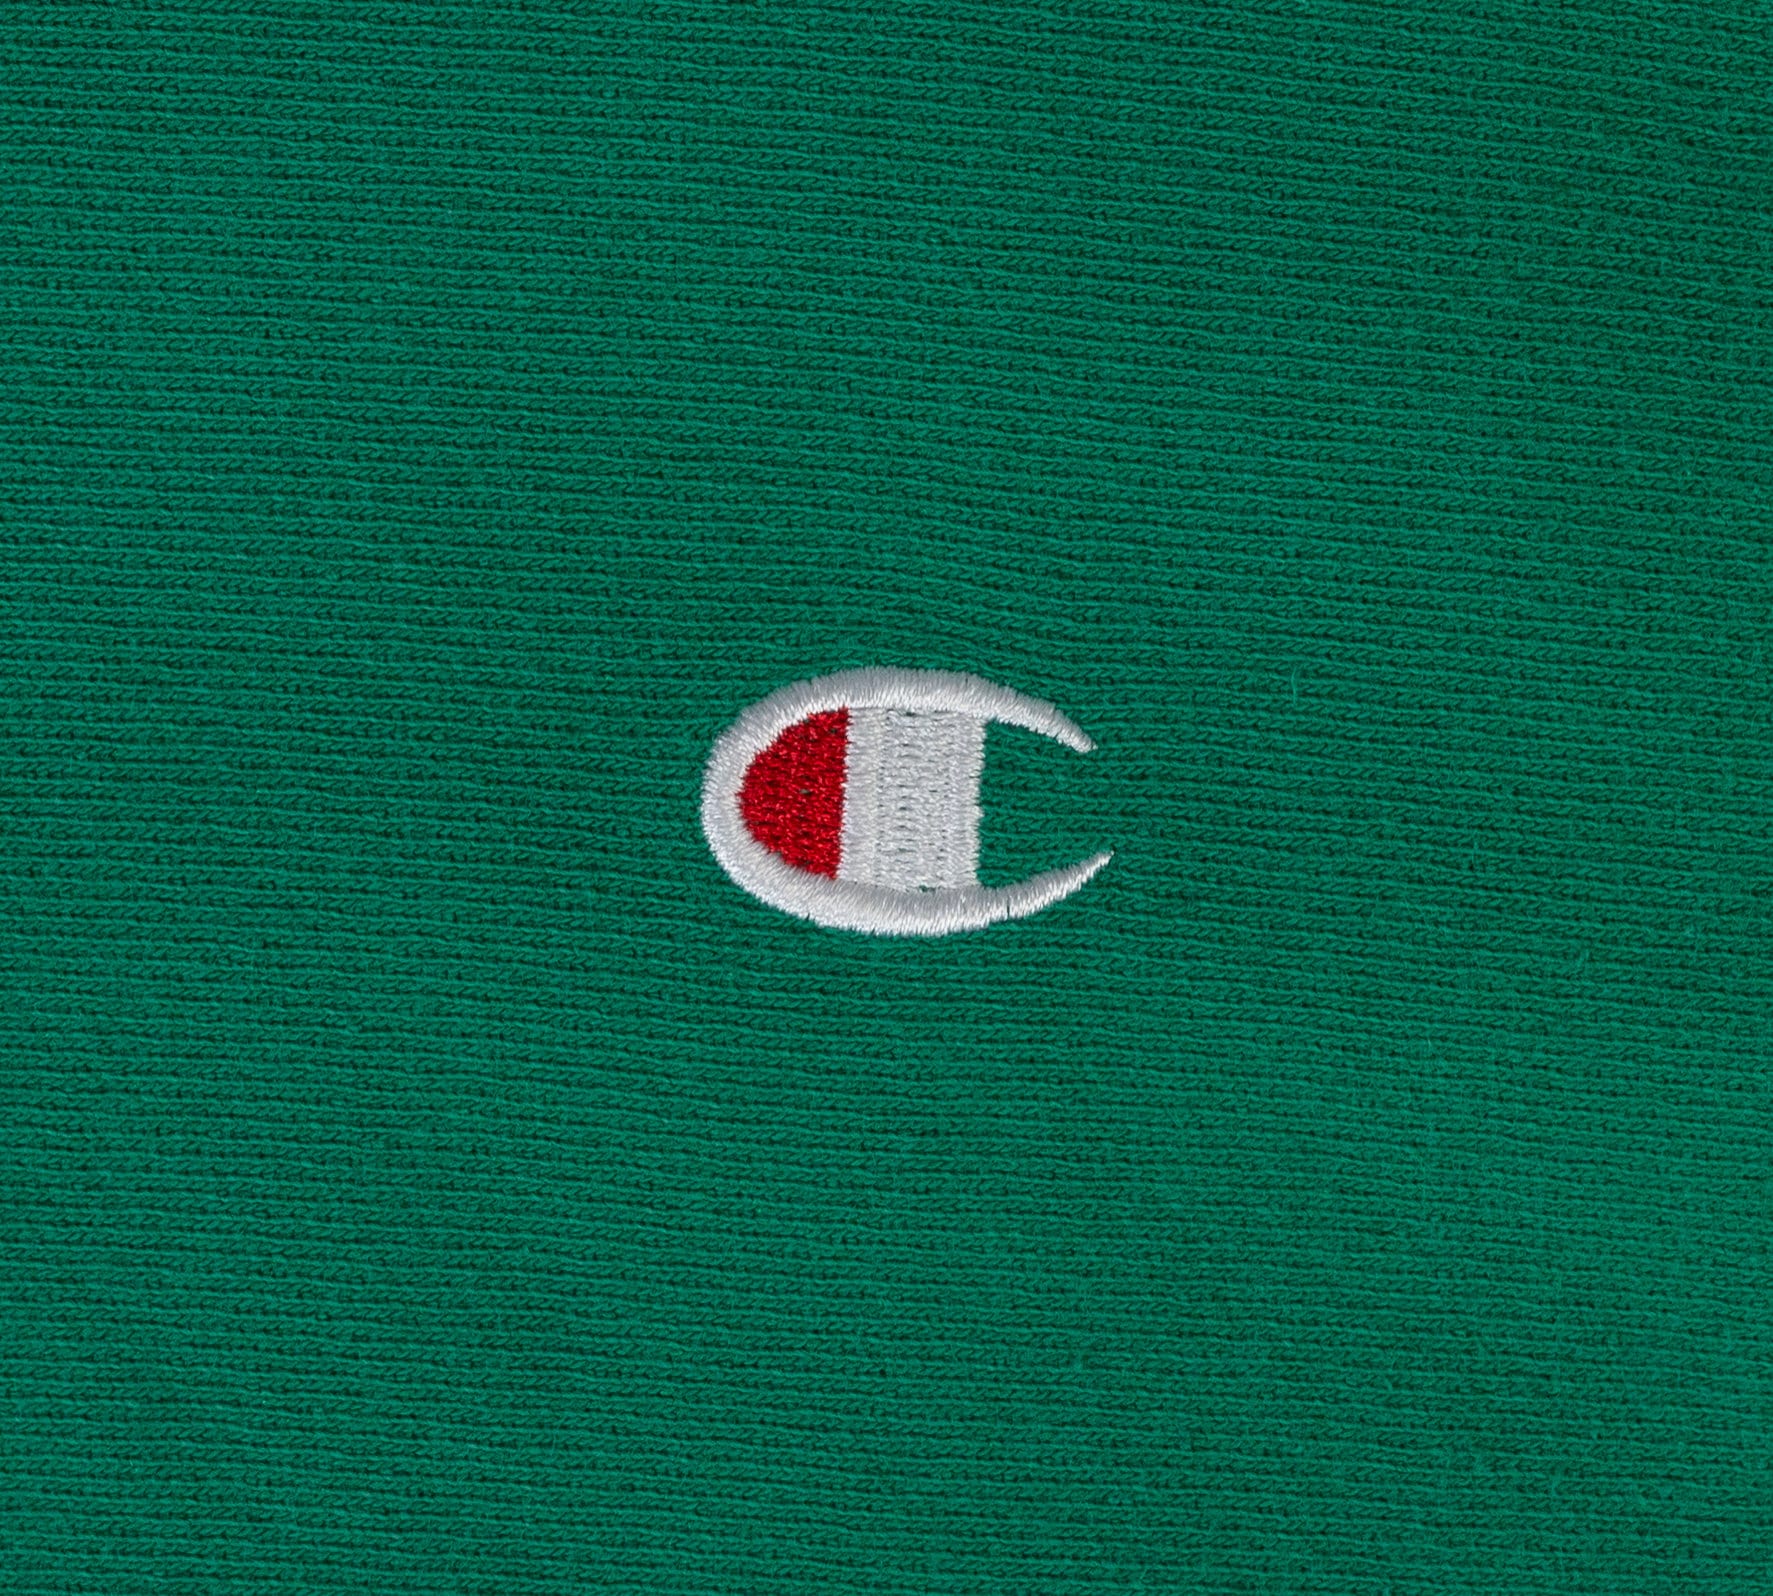 Vintage Champion Reverse Weave Frog Green Sweatshirt - Men's Small 